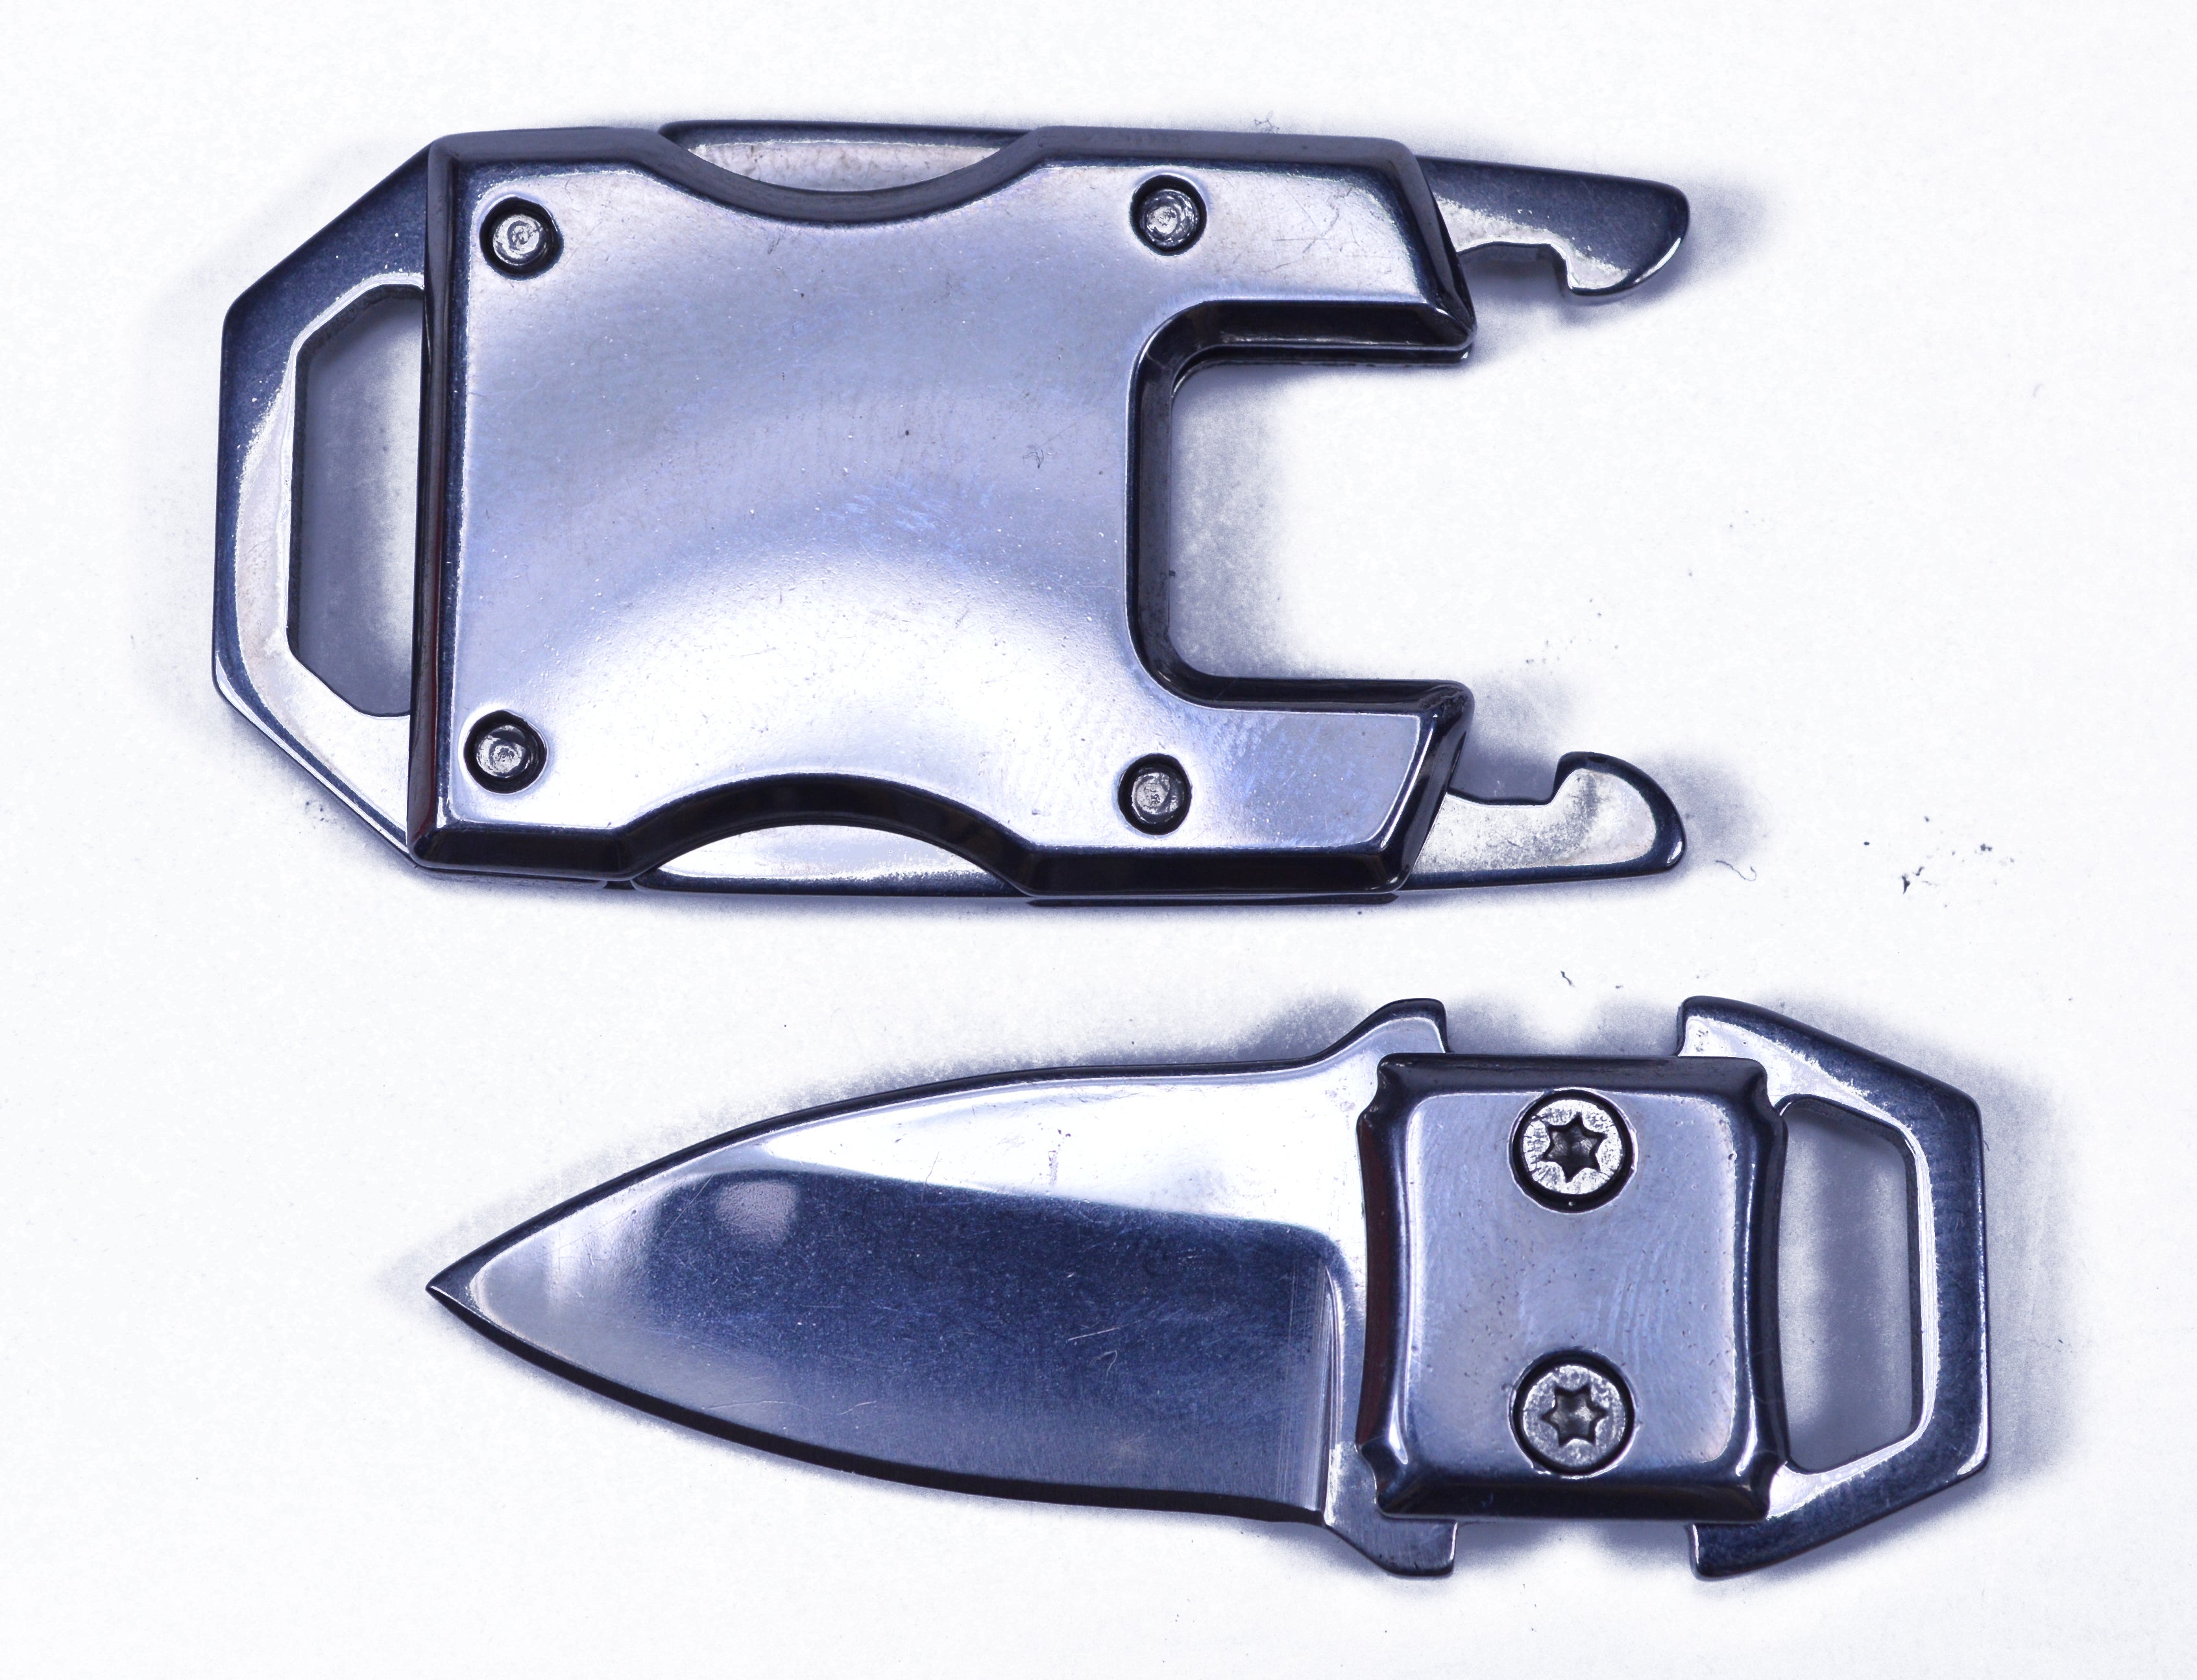 knife paracord key fob